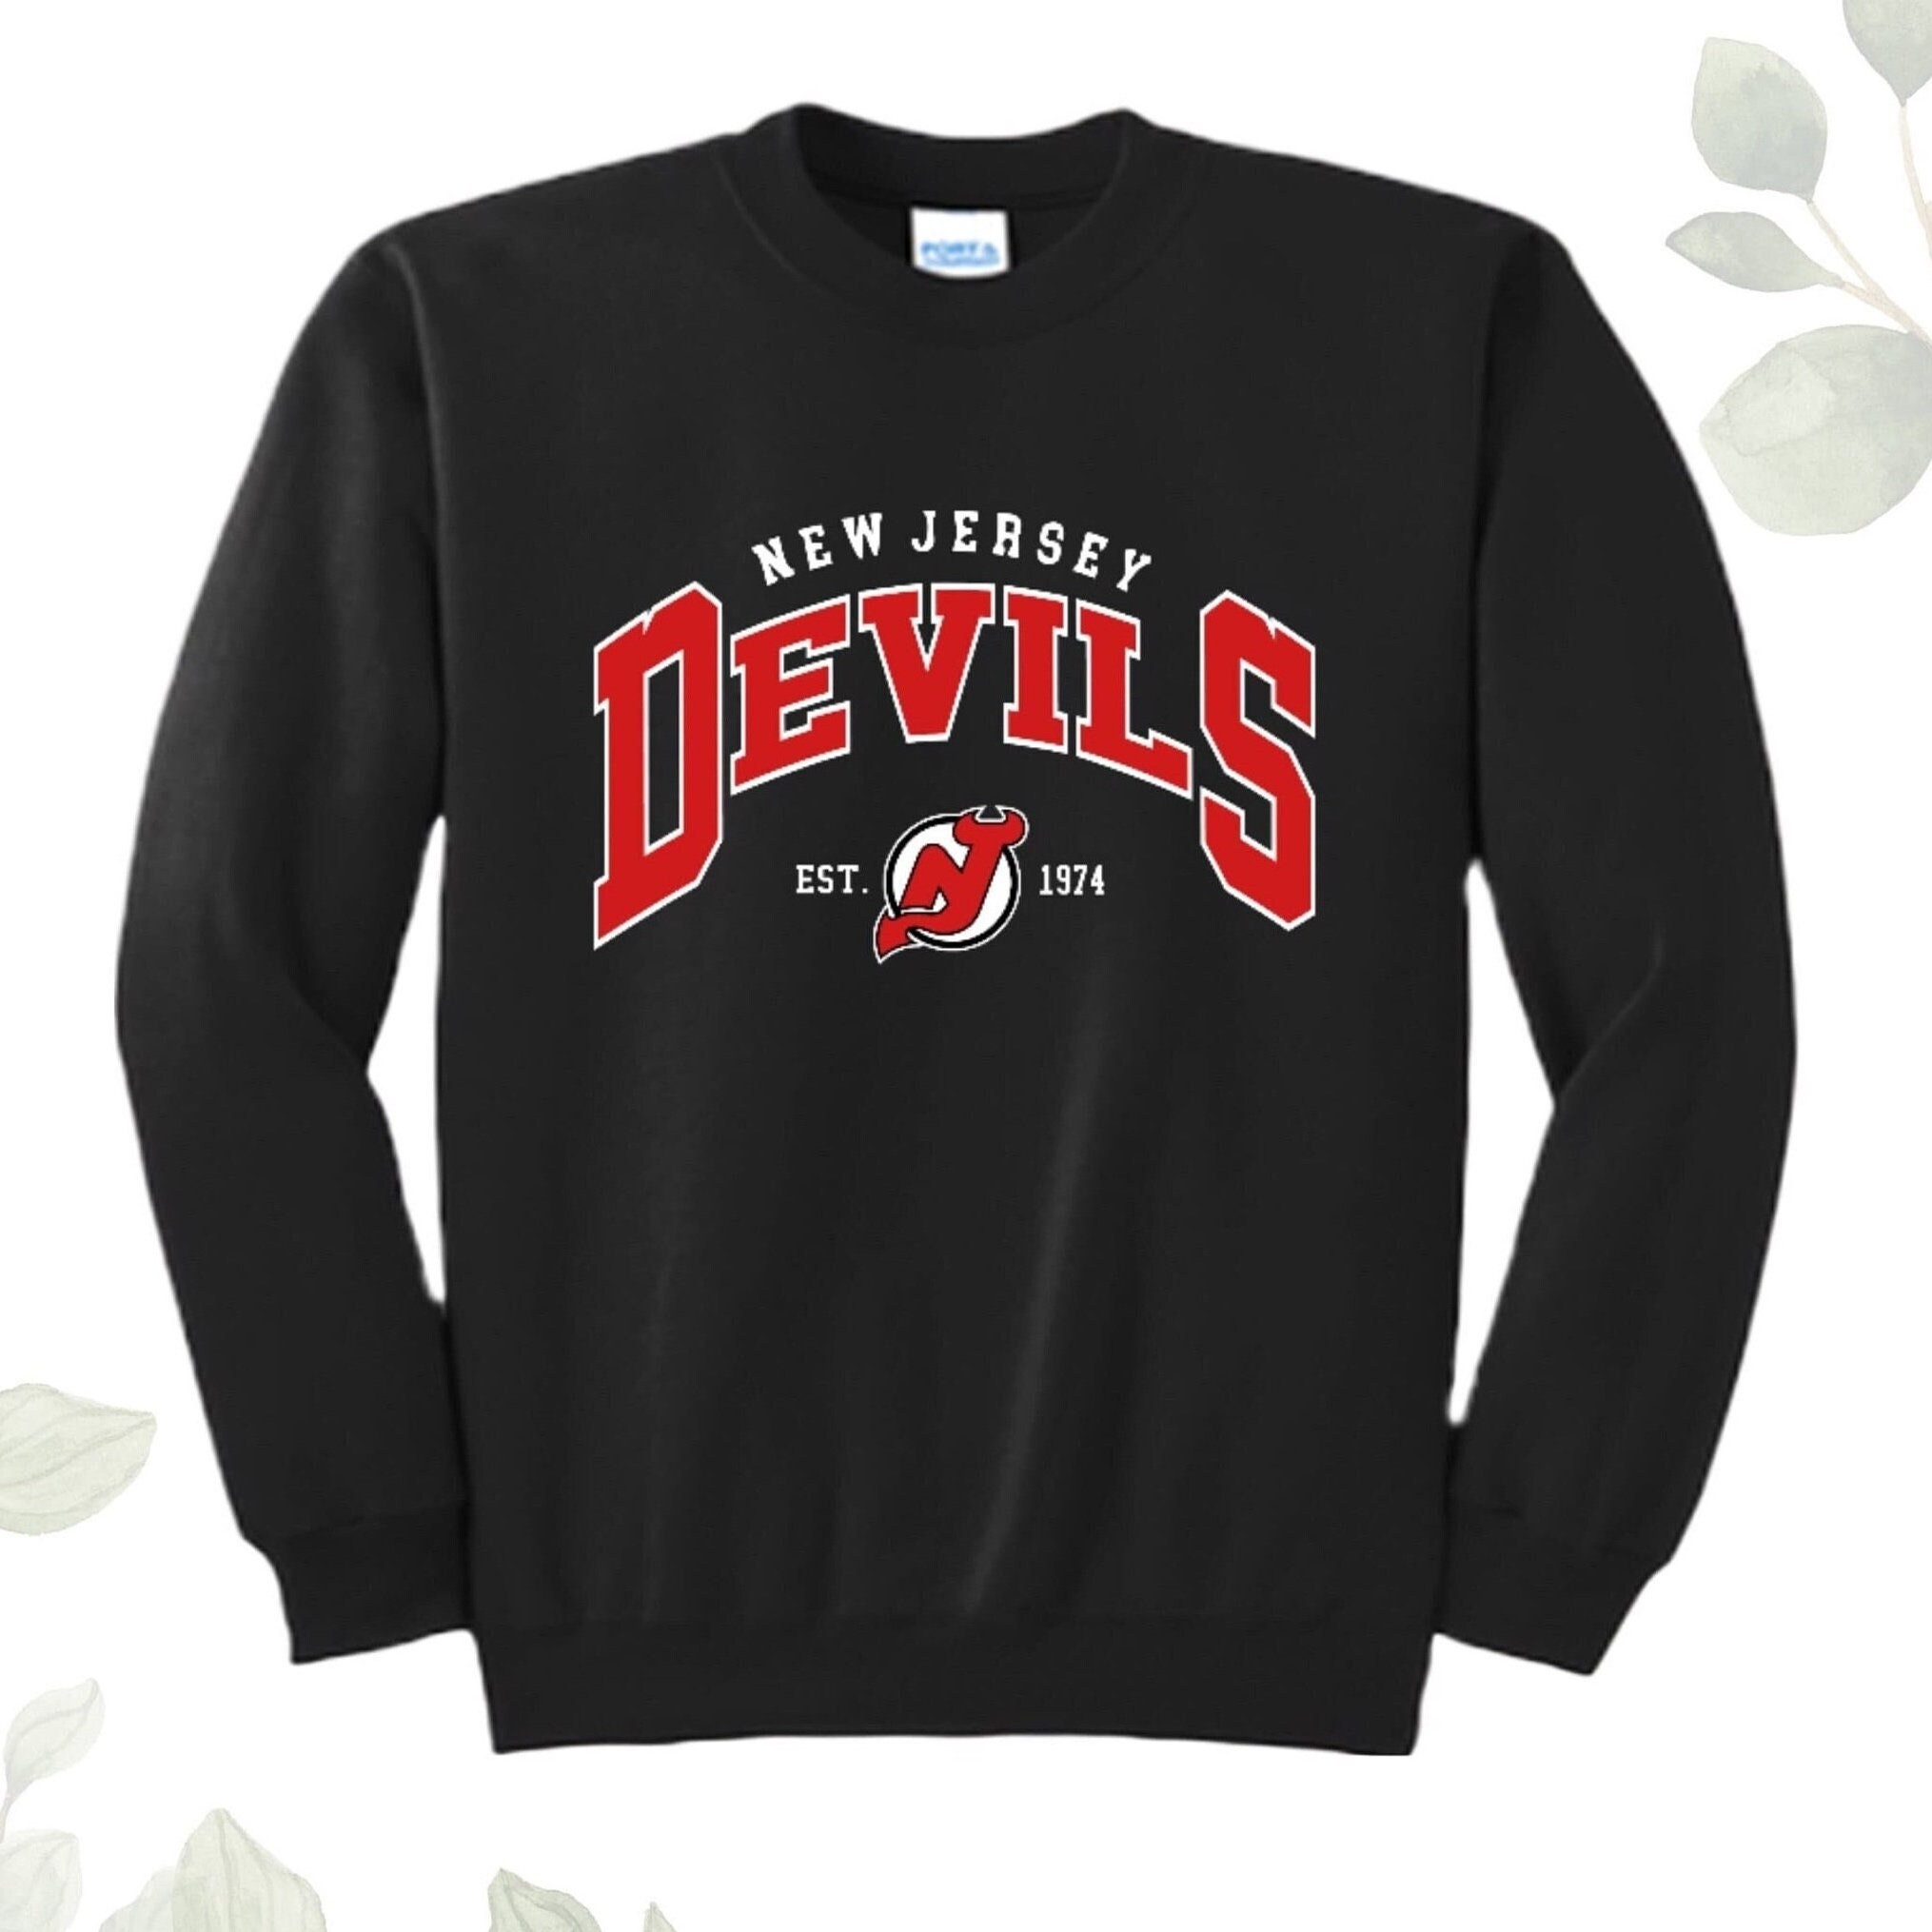 New Jersey Devils Portuguese Heritage Night T-Shirt men's size